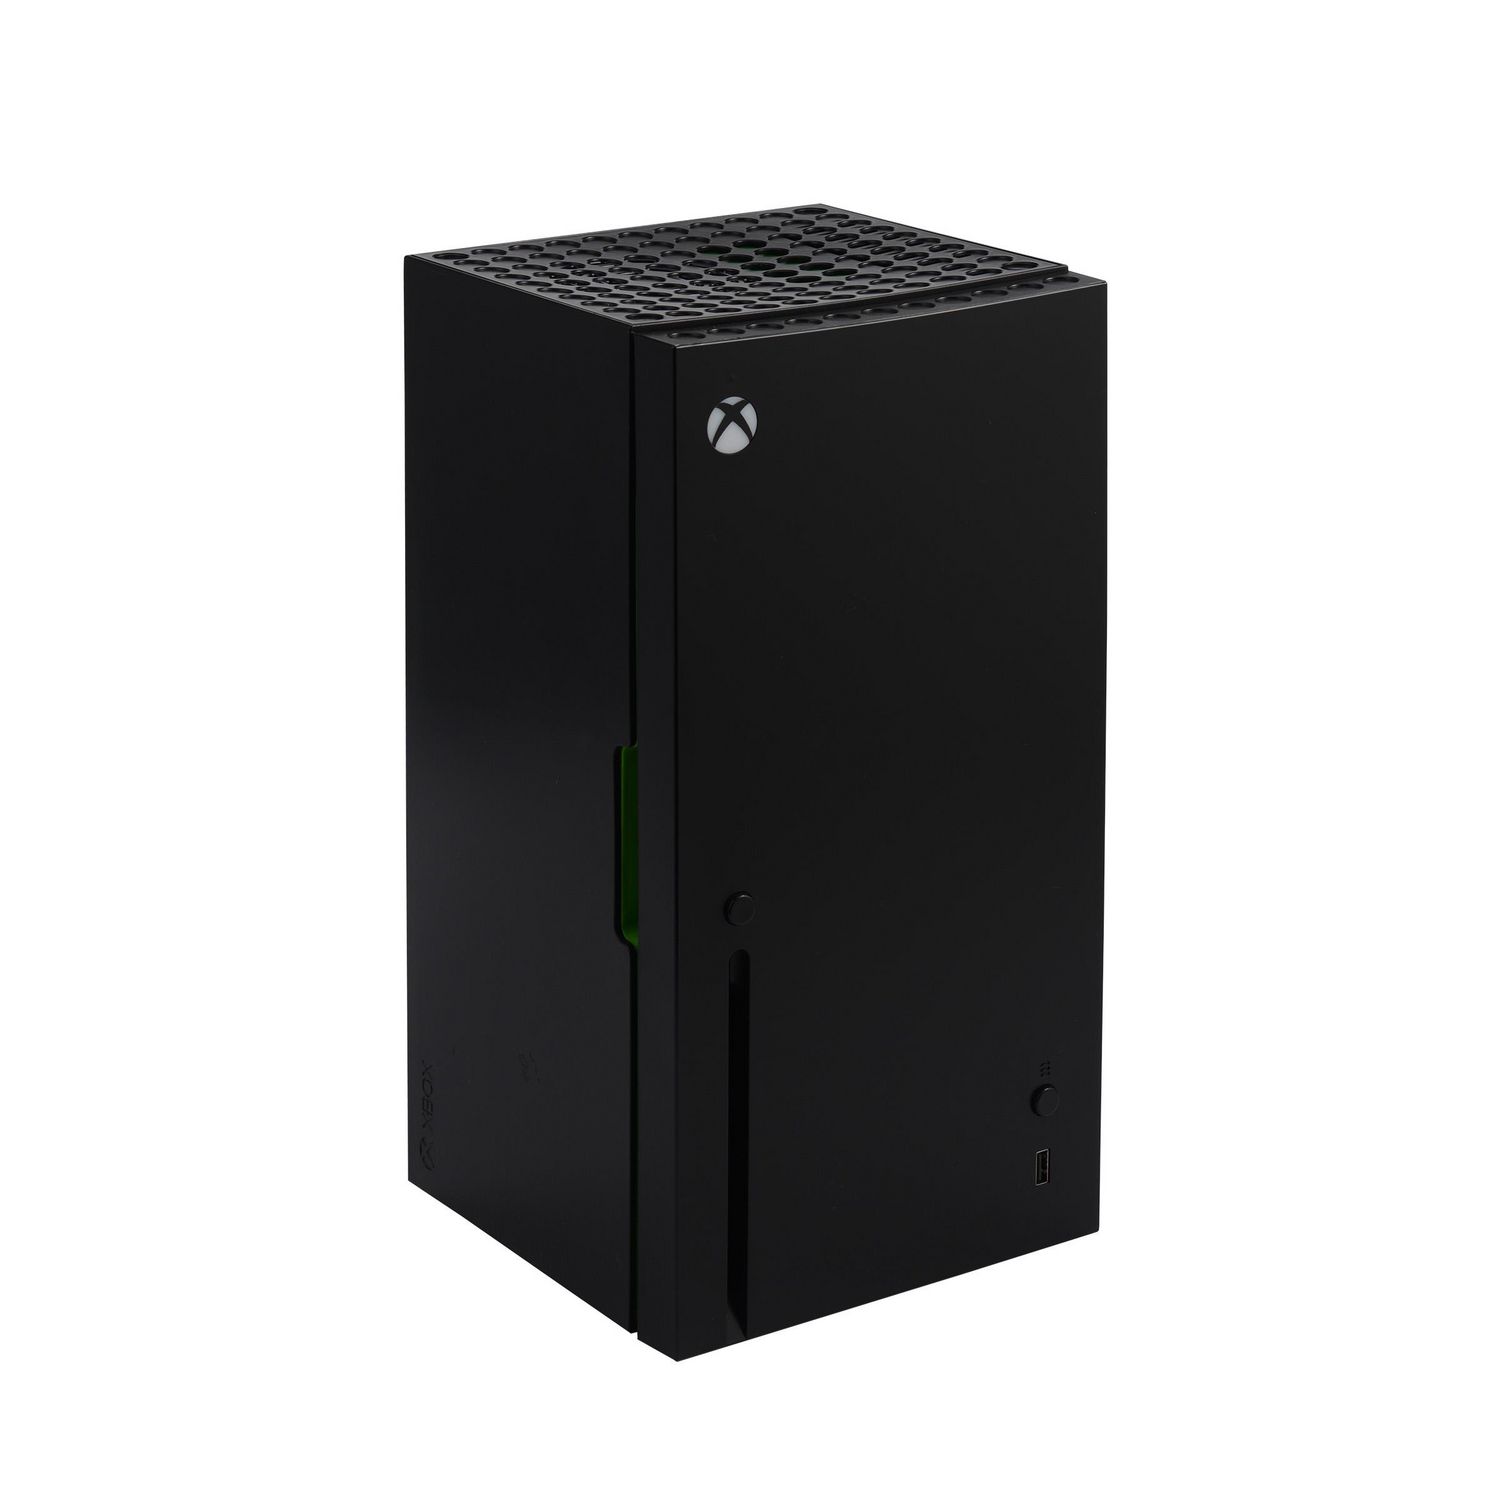 Le rafraîchissant Mini frigo Xbox Series X est moins cher pendant